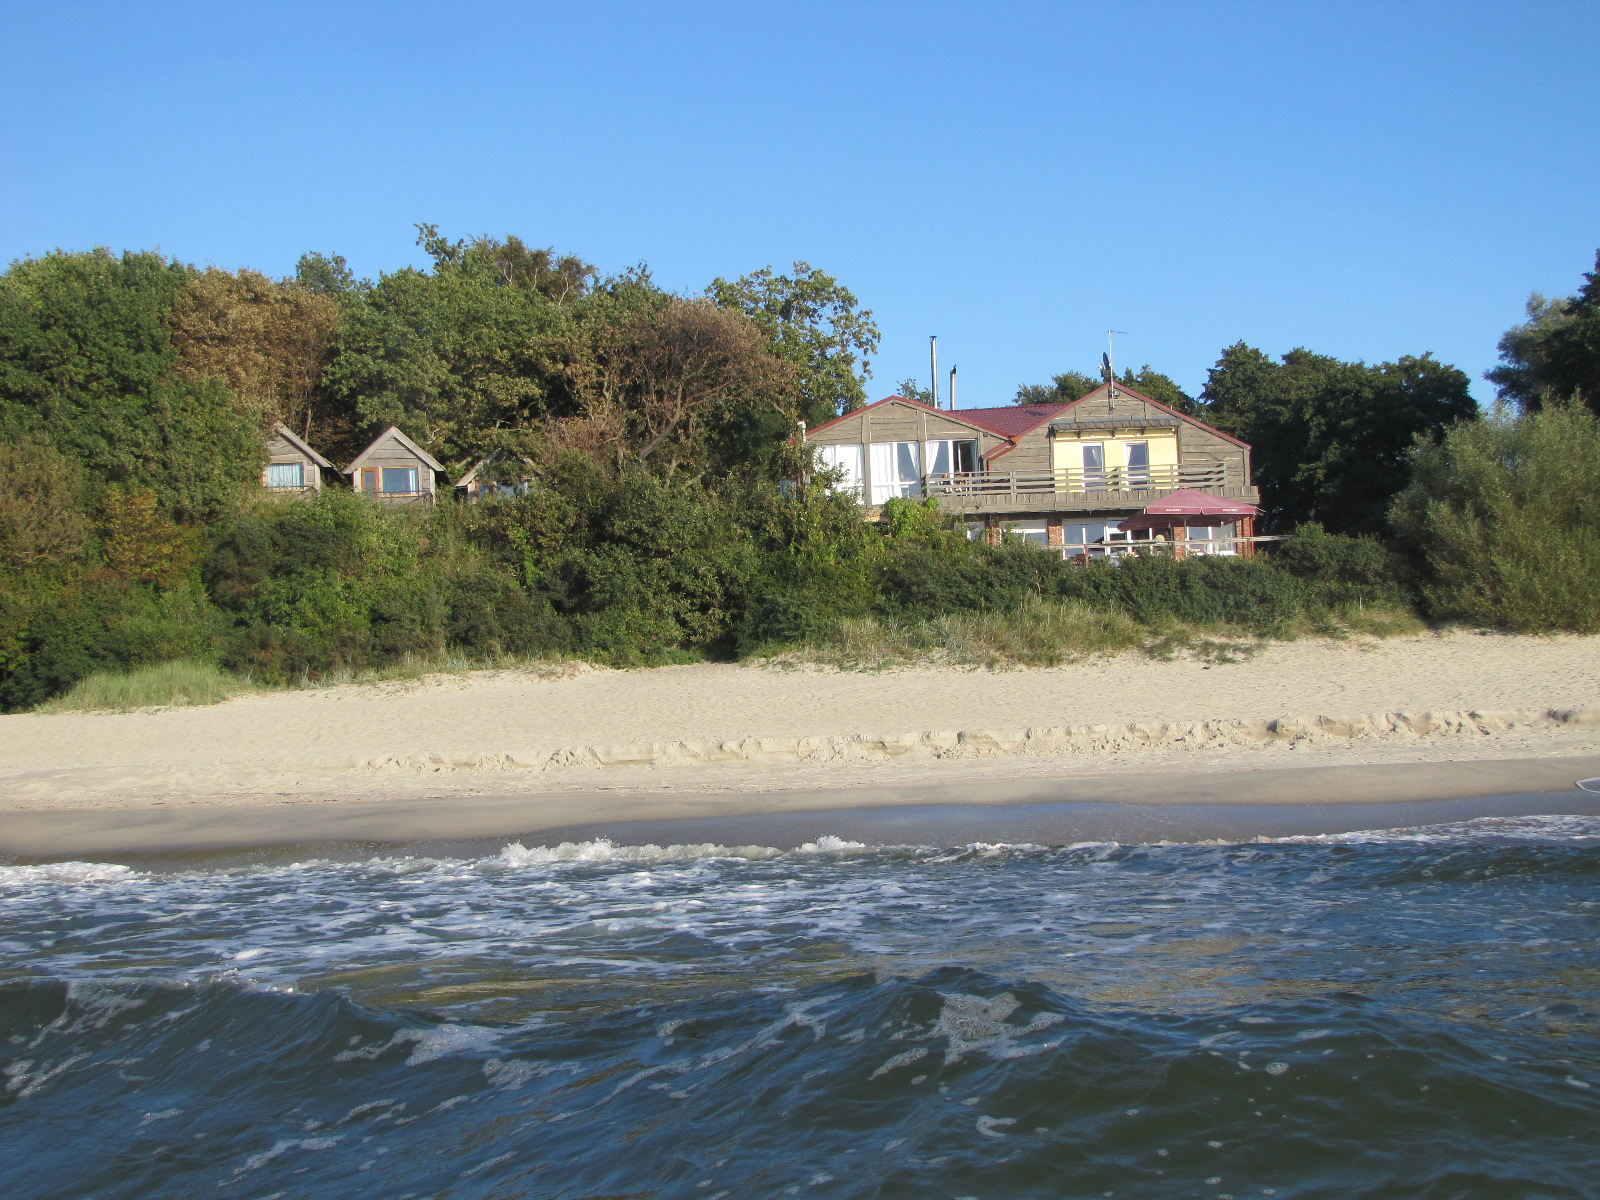 Foto di Vitland beach ubicato in zona naturale